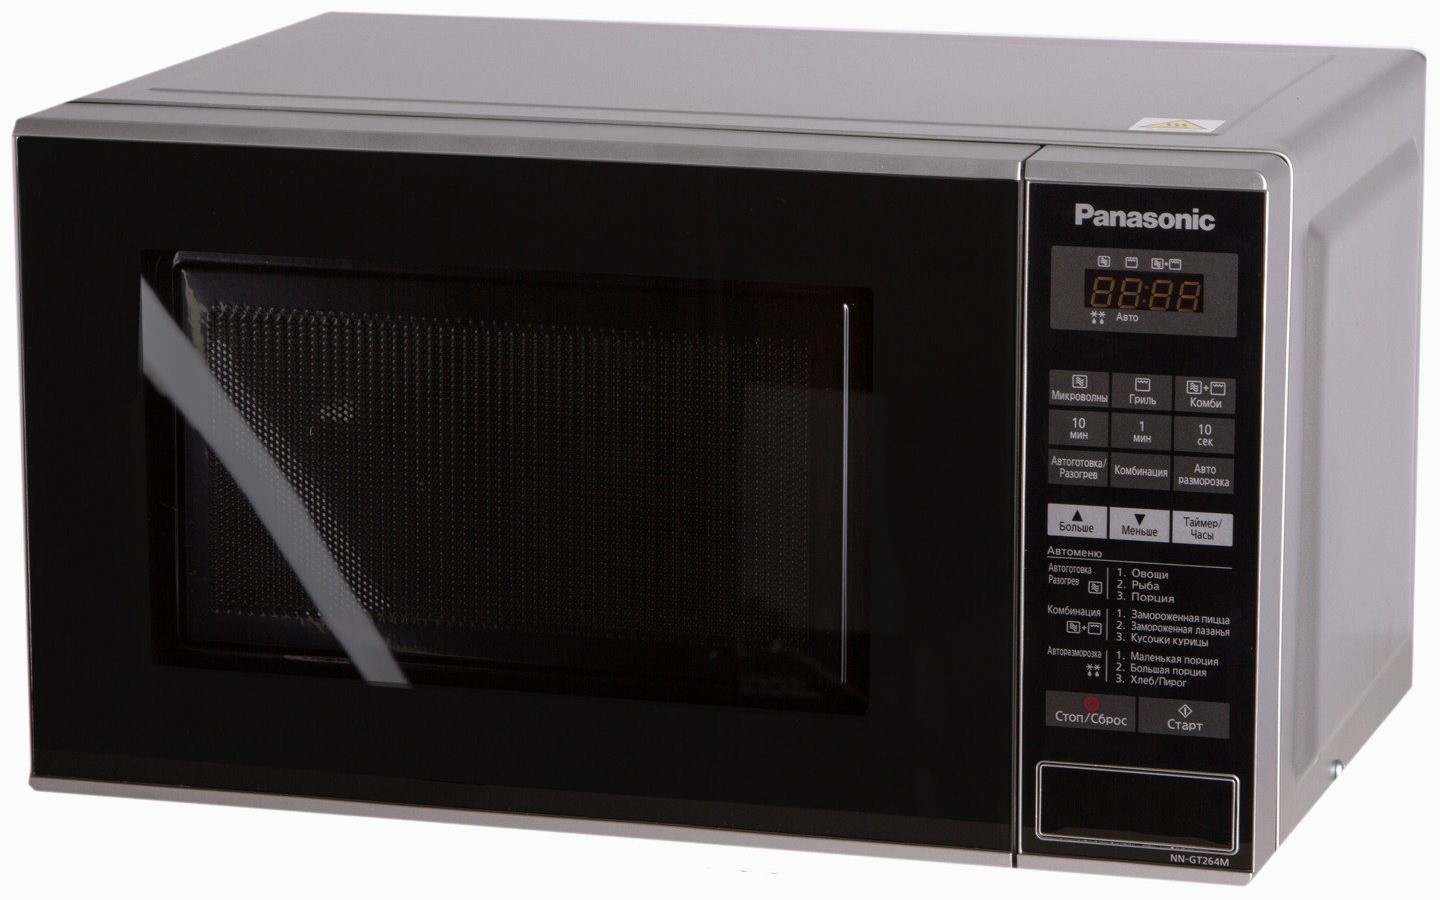 Микроволновая печь Panasonic NN-GT264MZPE цена 4499.00 грн - фотография 2